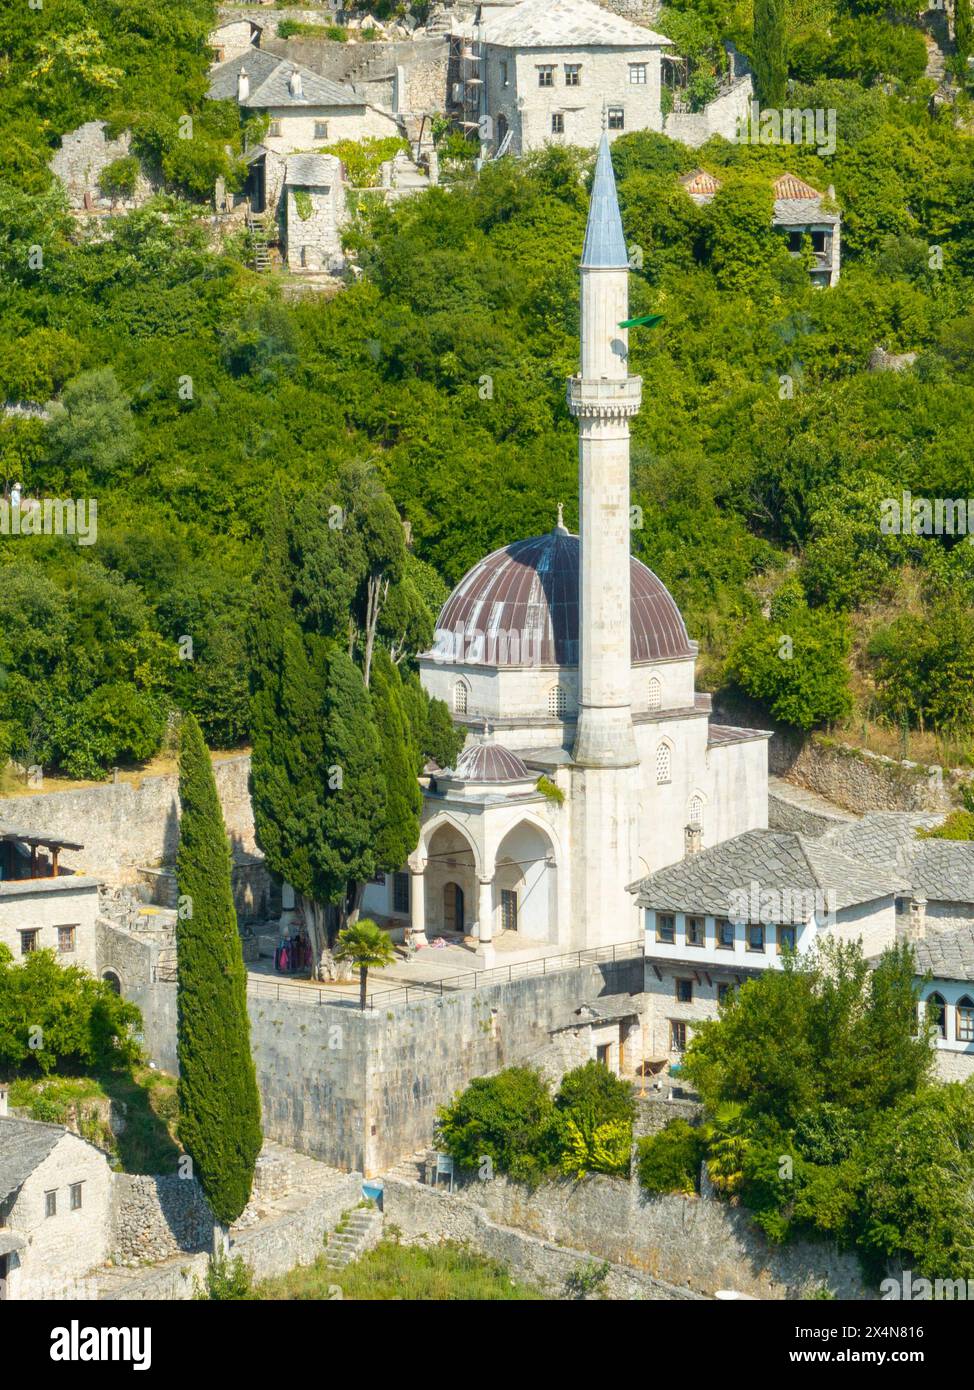 Aerial view of the Sisman Ibrahim Pasha Mosque in Pocitelj, Bosnia and Herzegovina. Stock Photo